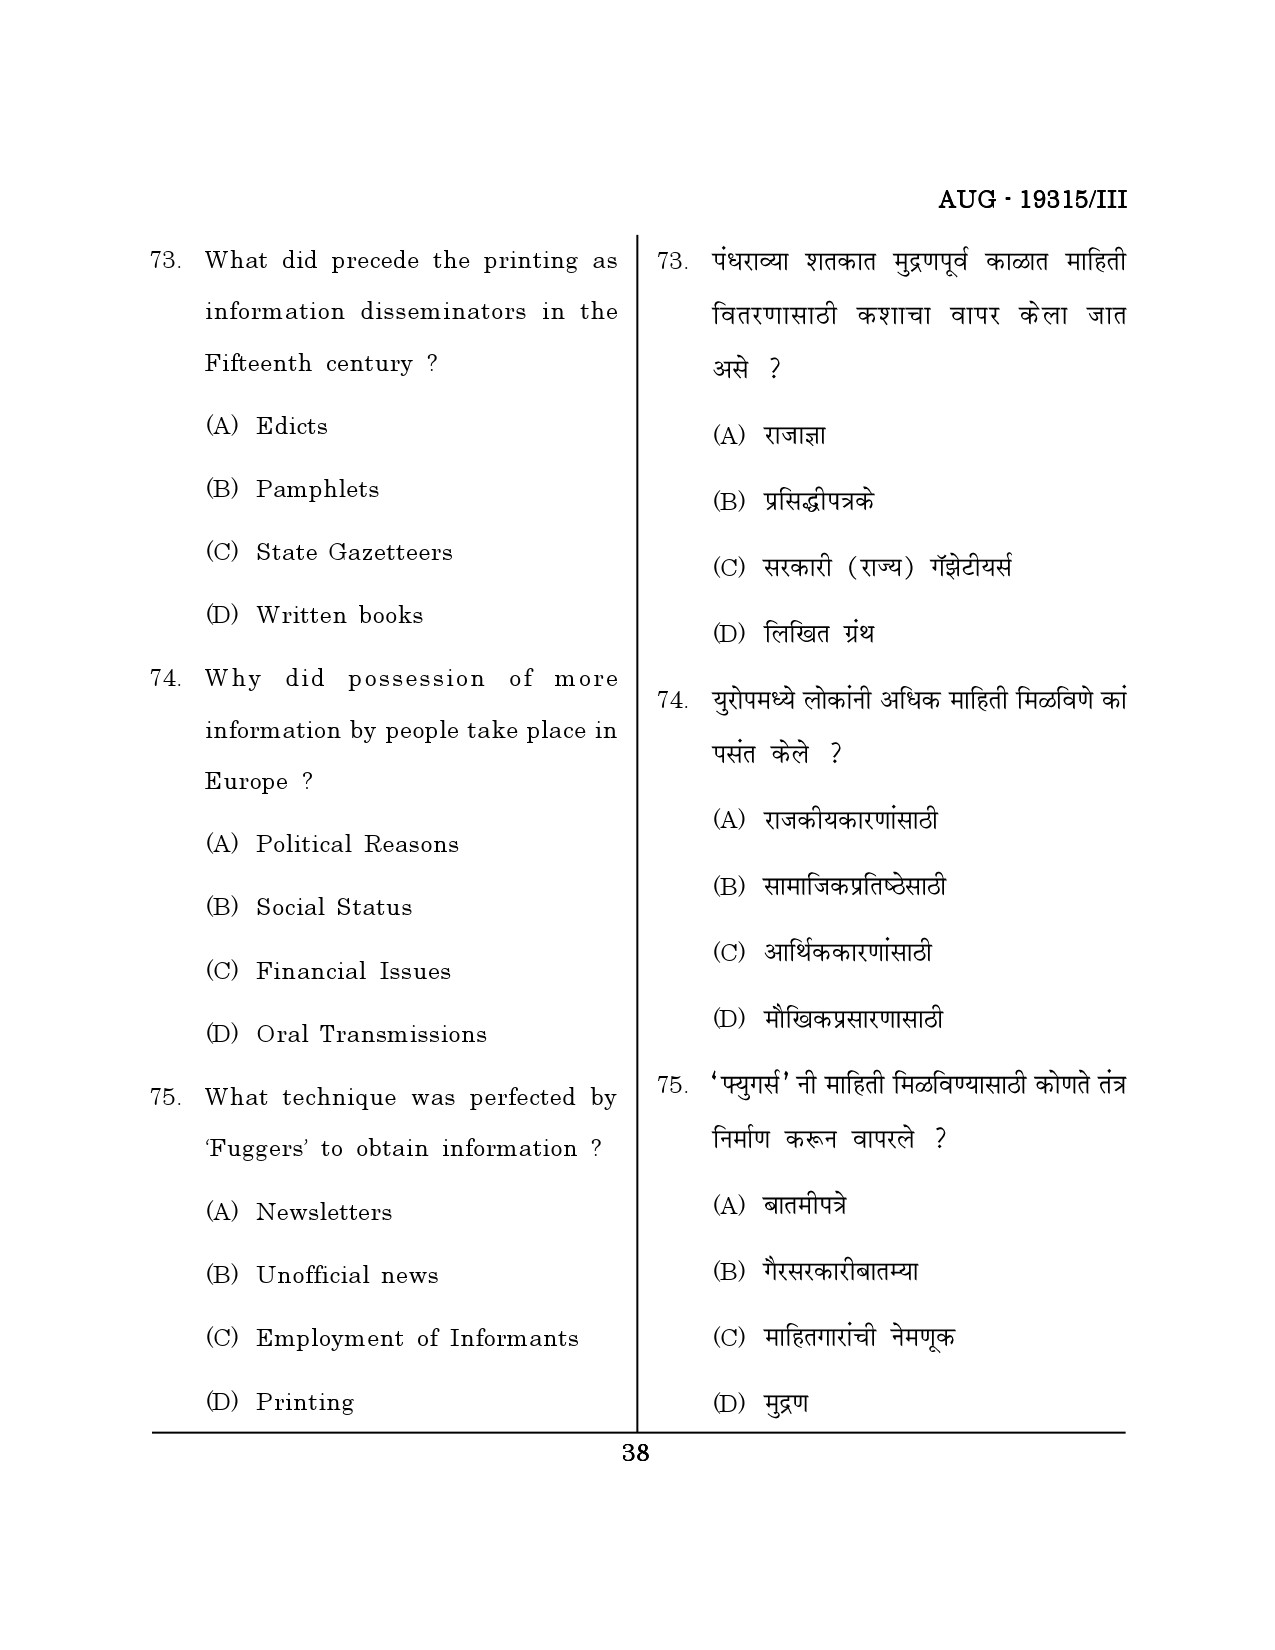 Maharashtra SET Journalism and Mass Communication Question Paper III August 2015 37